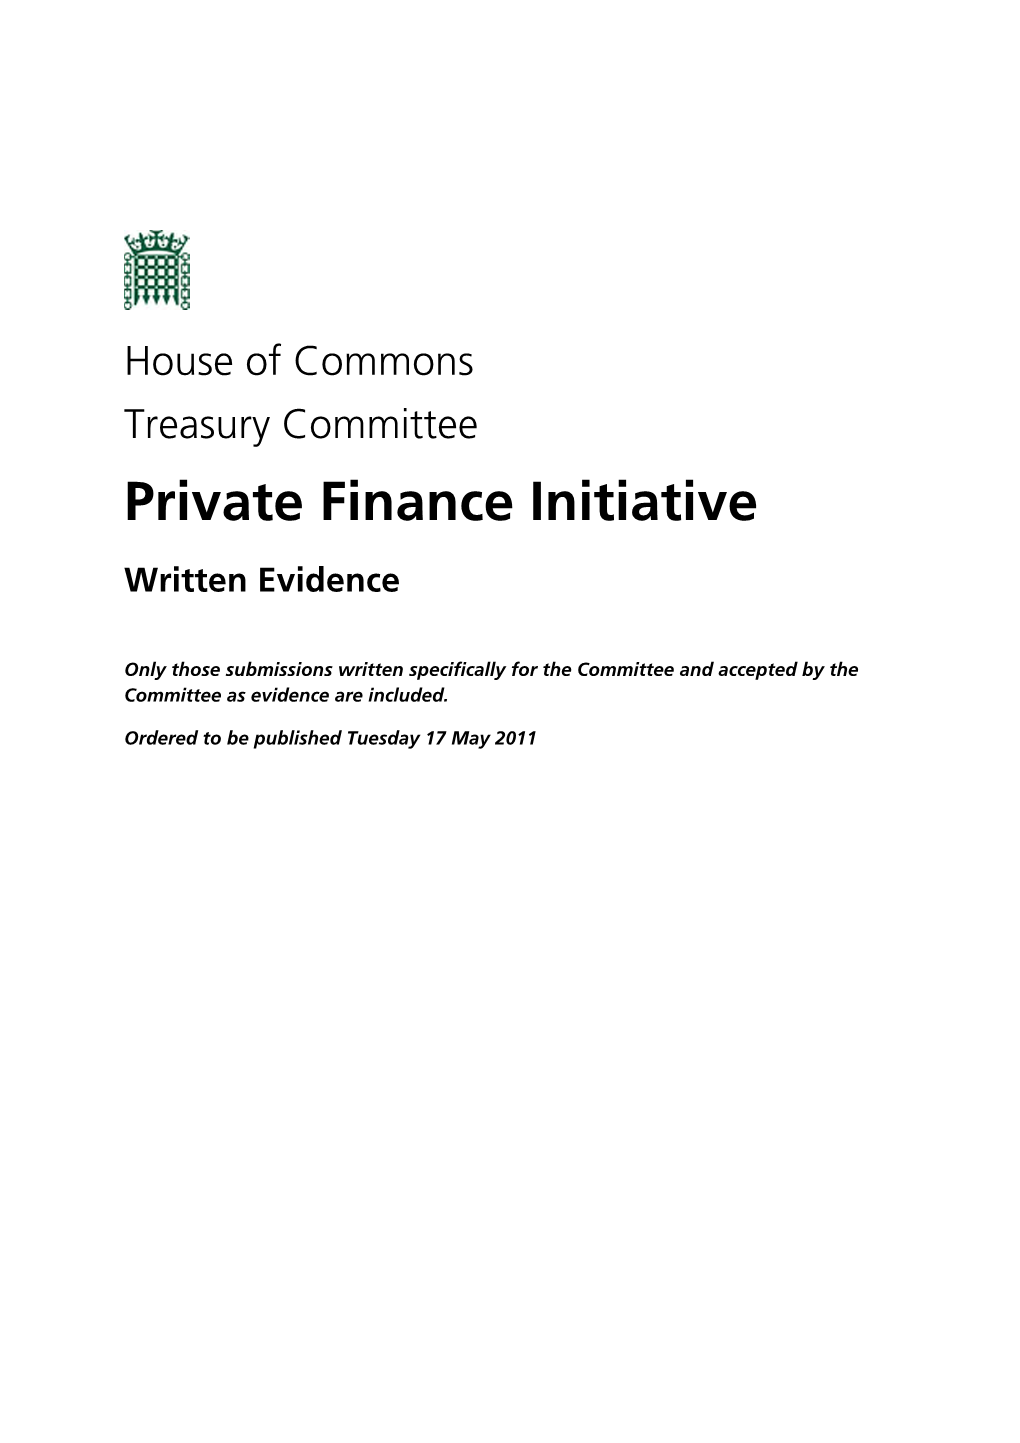 Private Finance Initiative Written Evidence